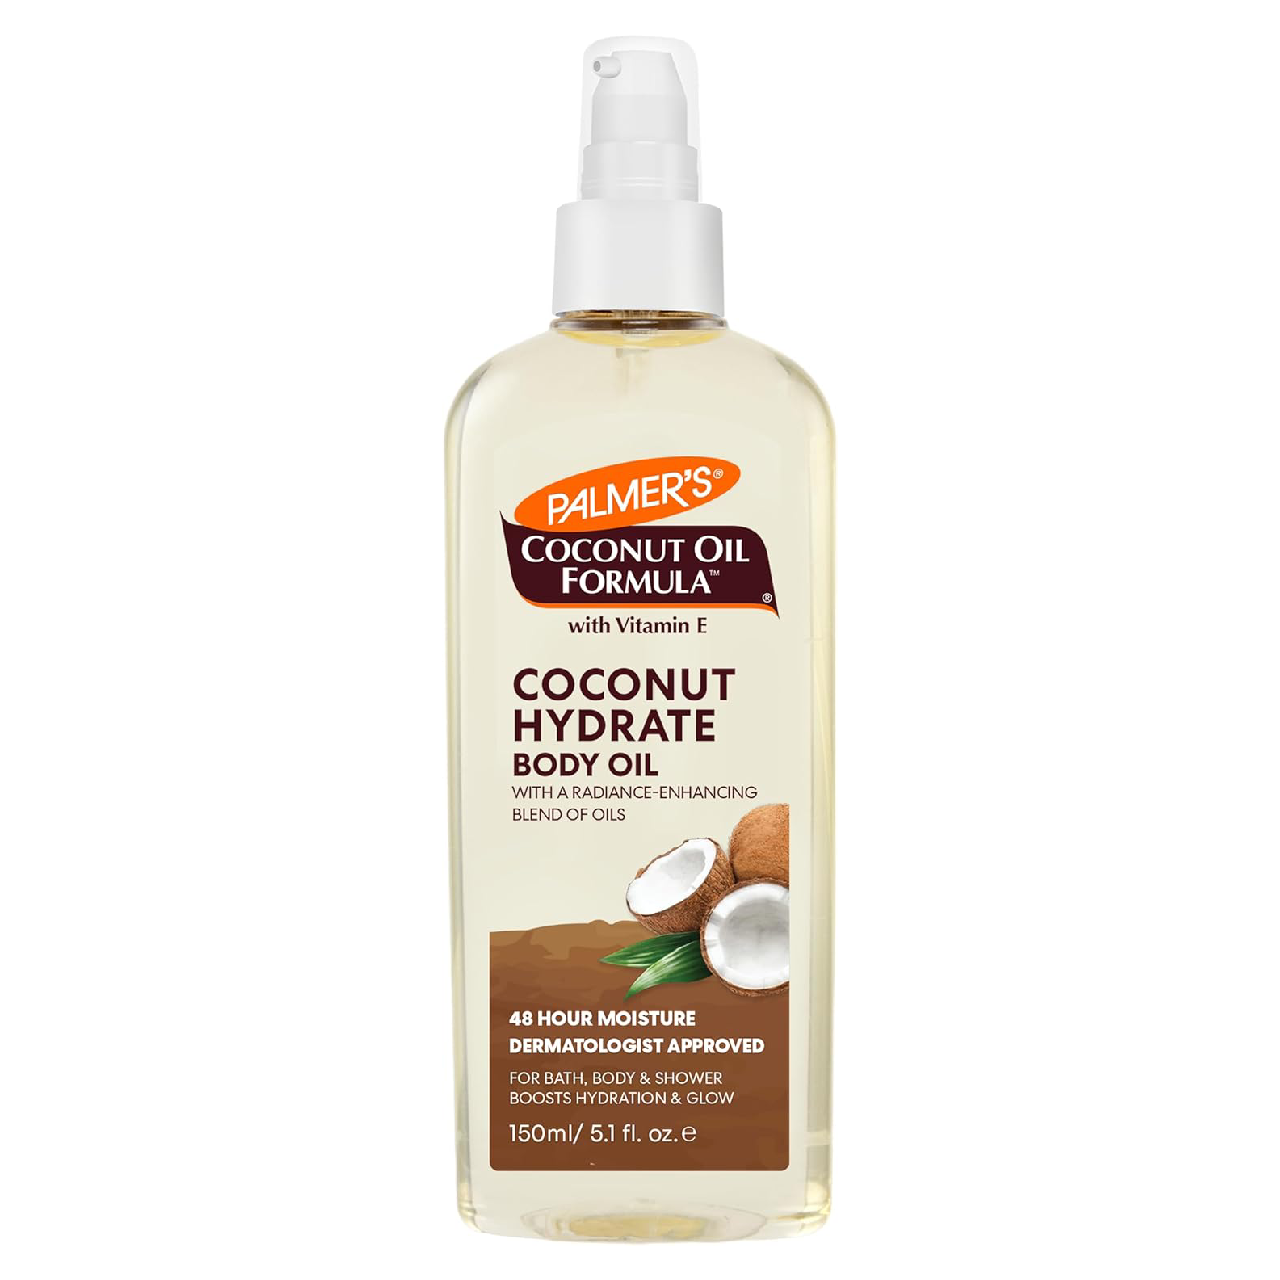 Bottle of Palmer’s Coconut Oil Formula Coconut Oil Body Oil against a white background